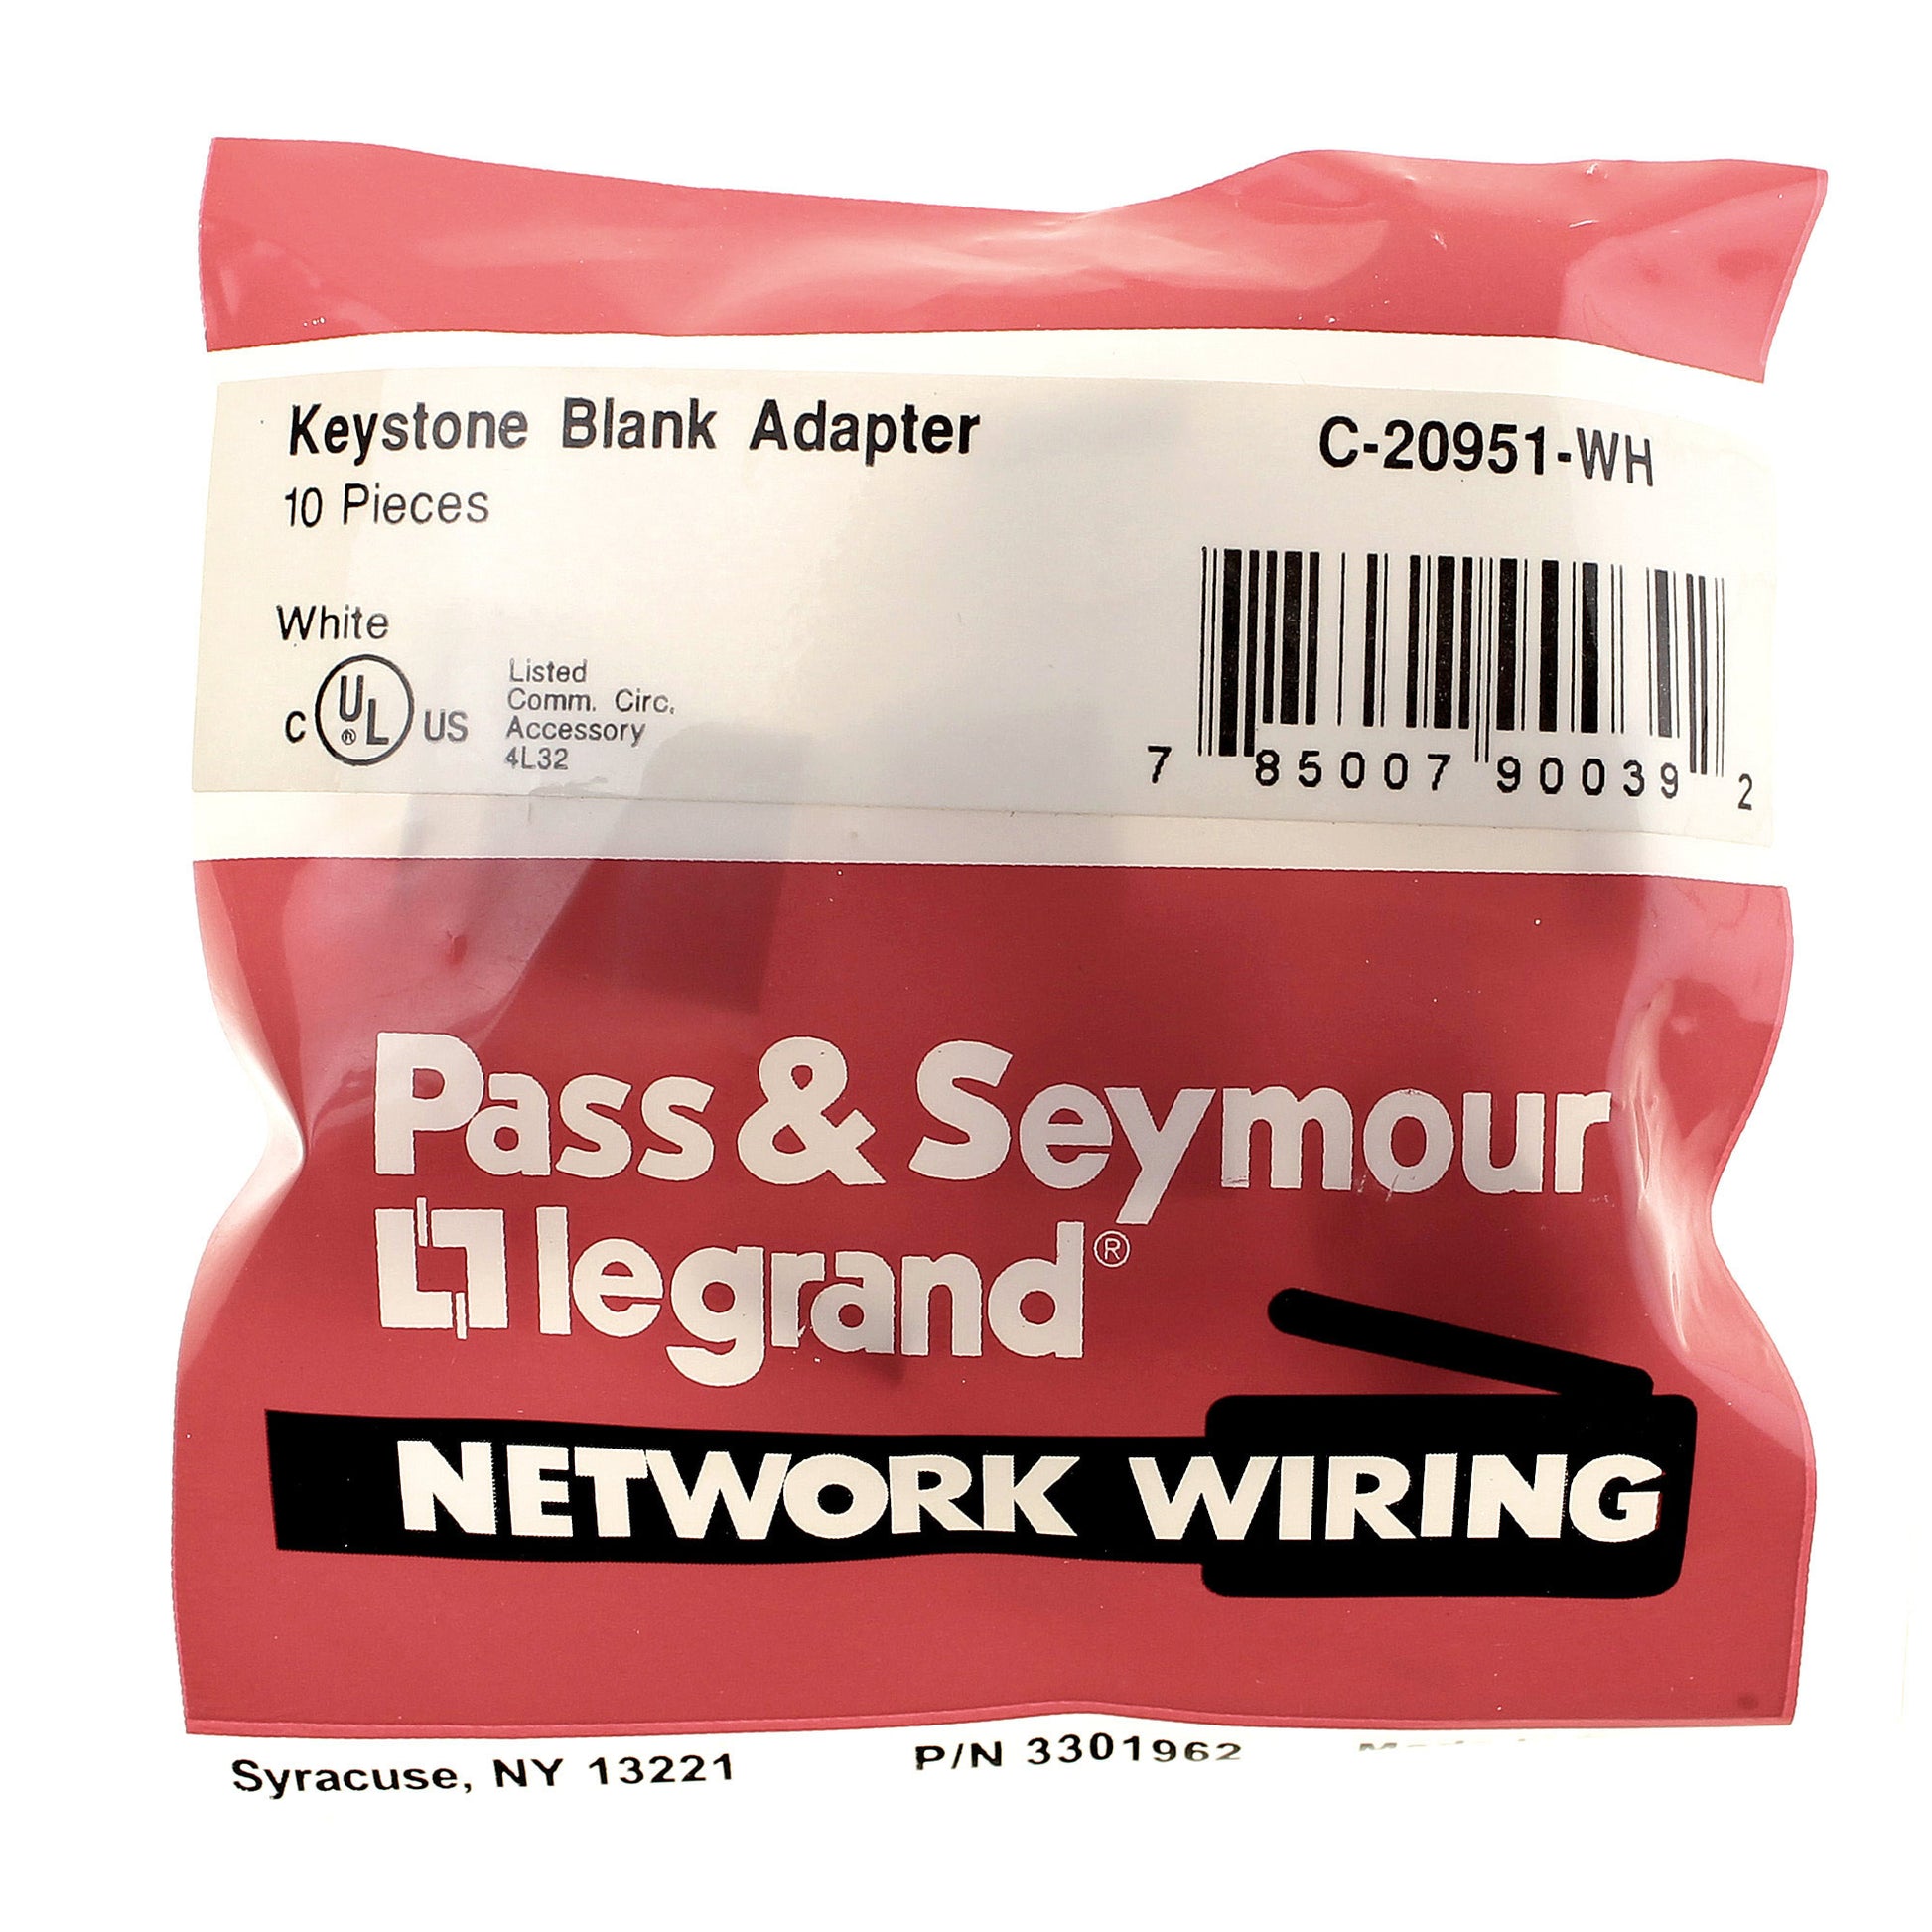 Pass & Seymour Legrand C-20951-WH